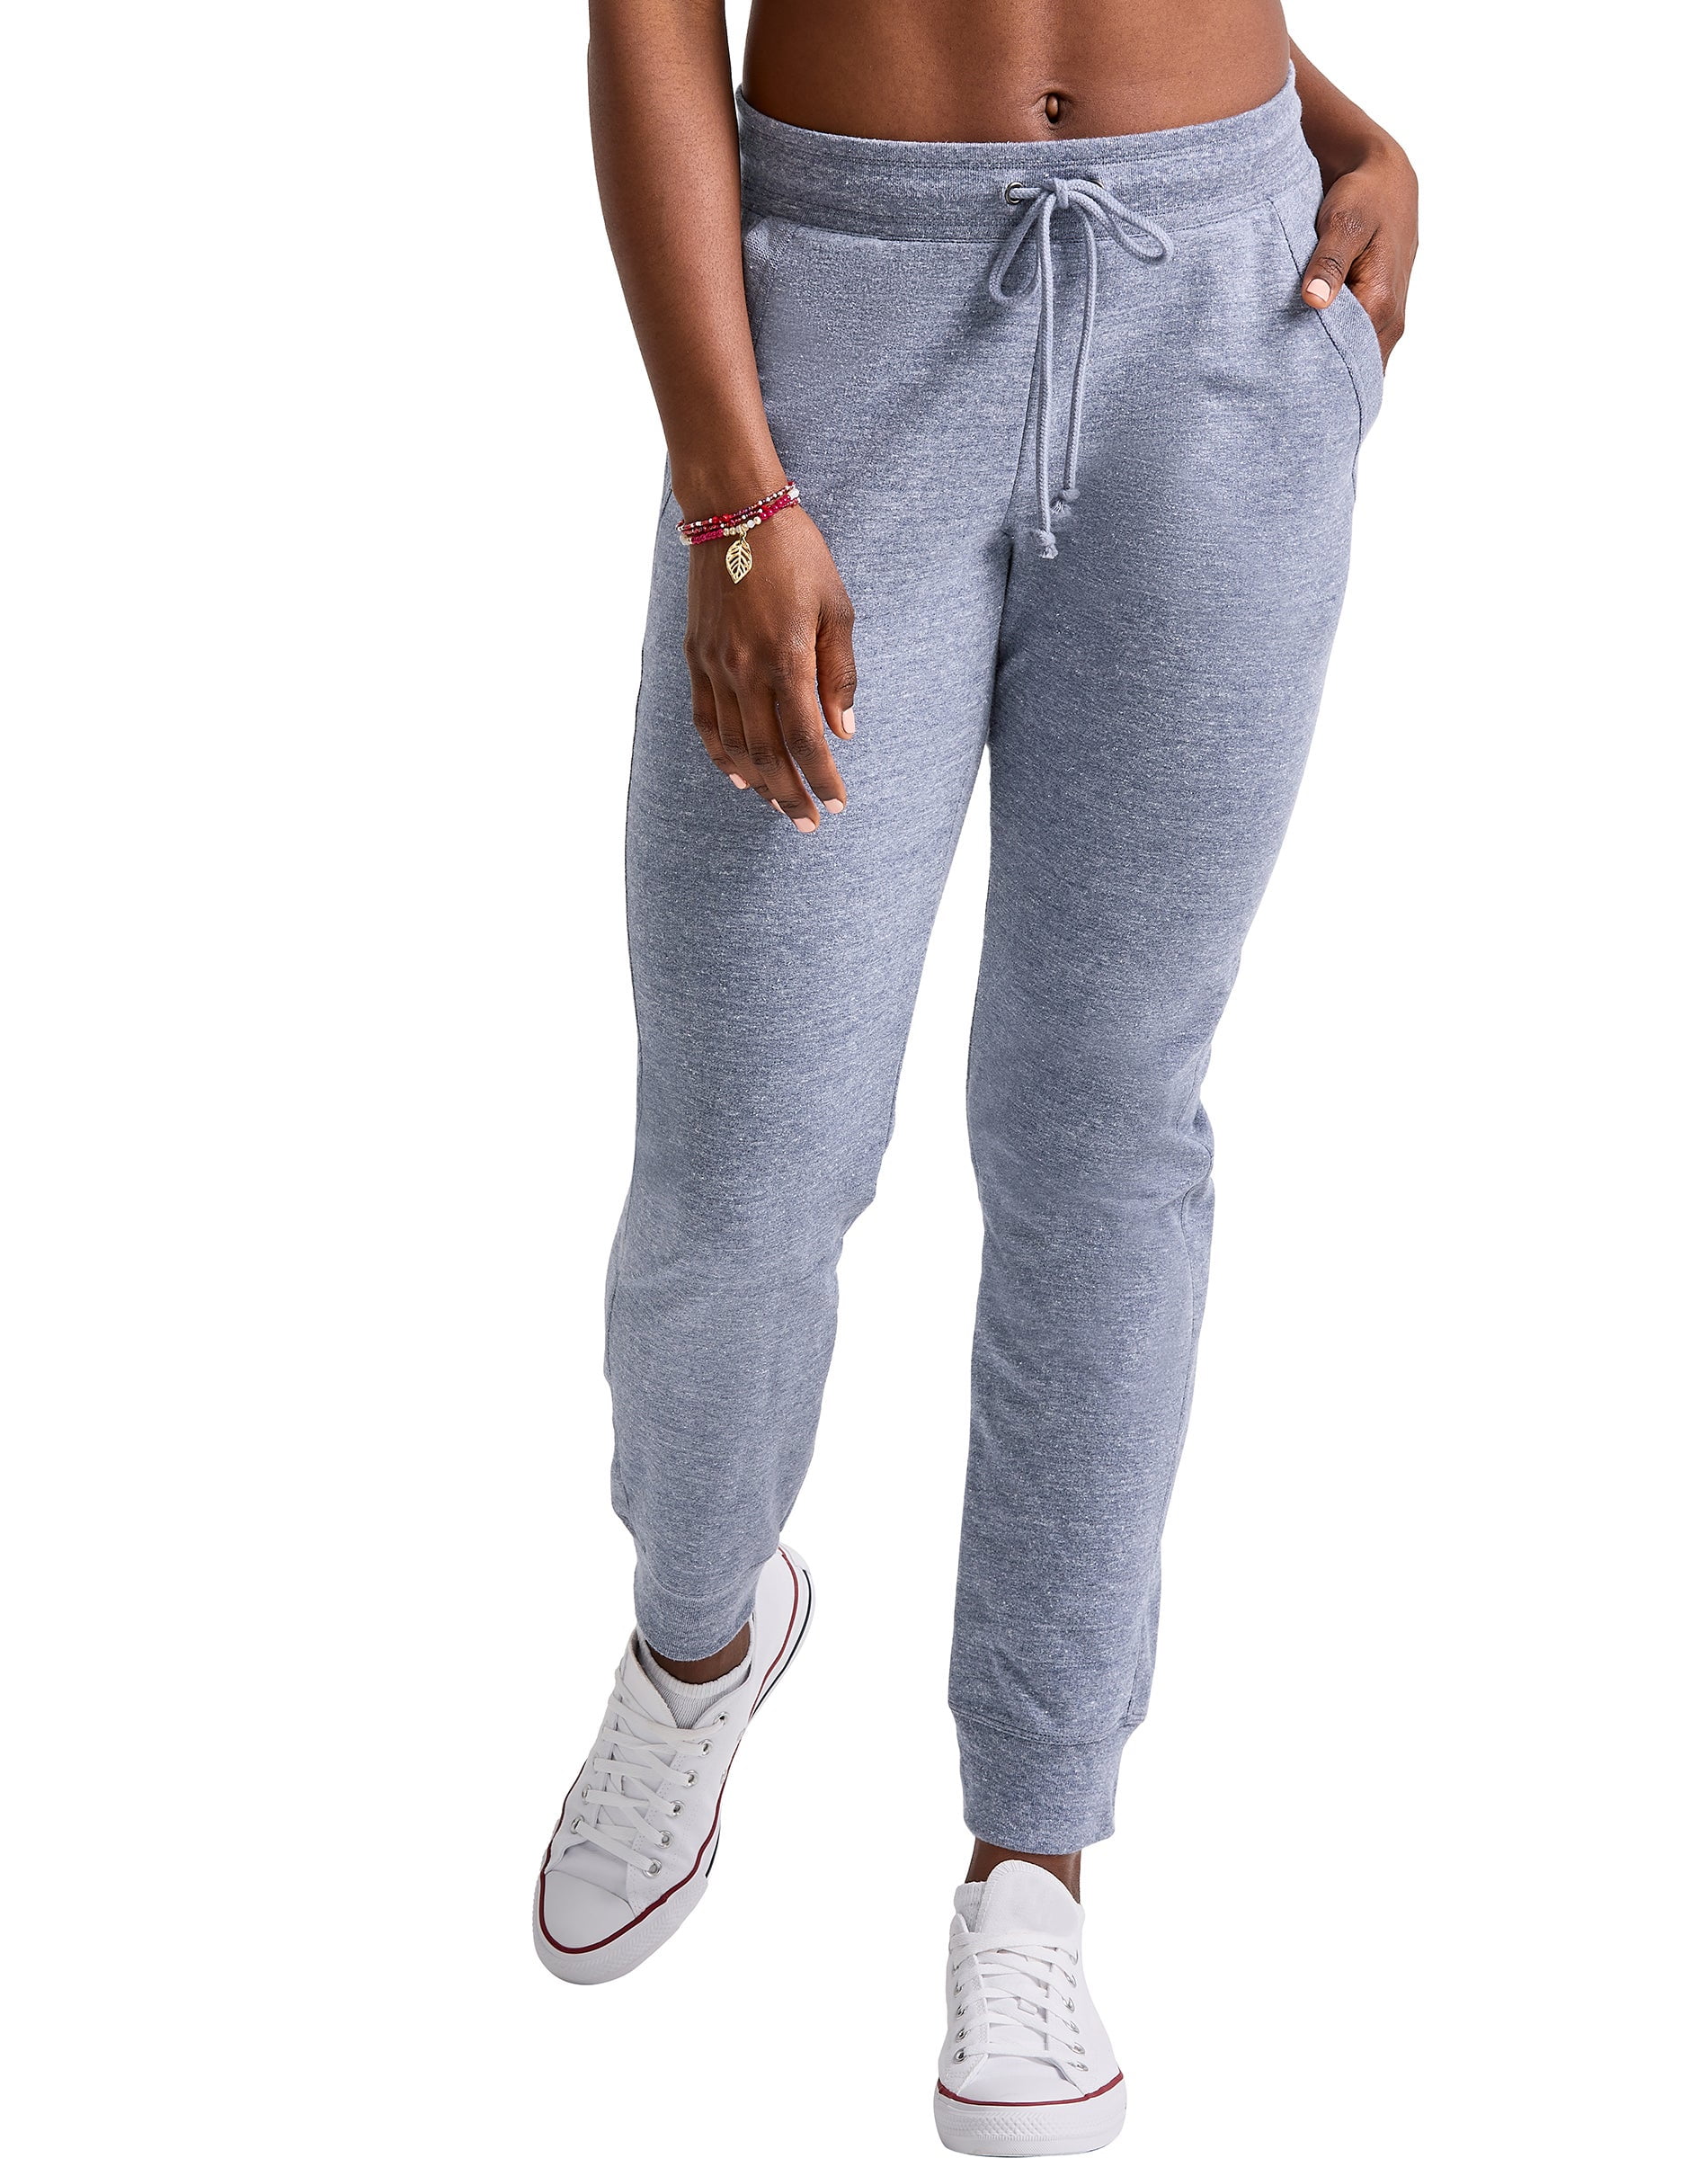 HANES Womens Tri-blend French Terry Jogger Sweatpant Pockets Sz XL